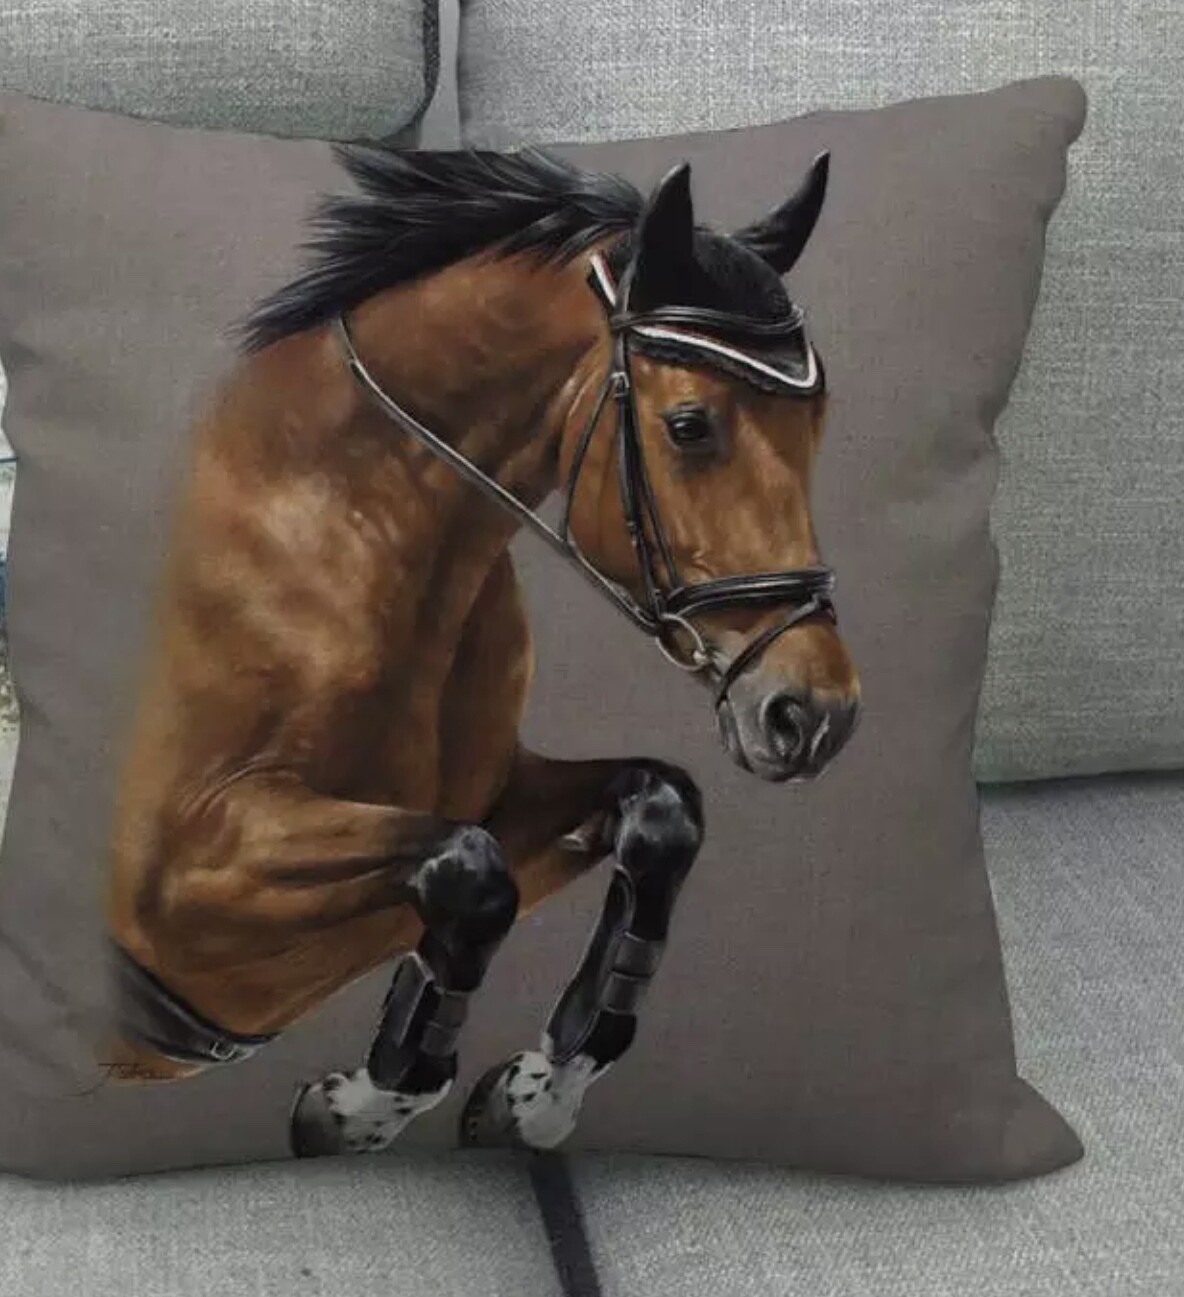 Equestrian Jumper Horse Pillow Cover Home Decor